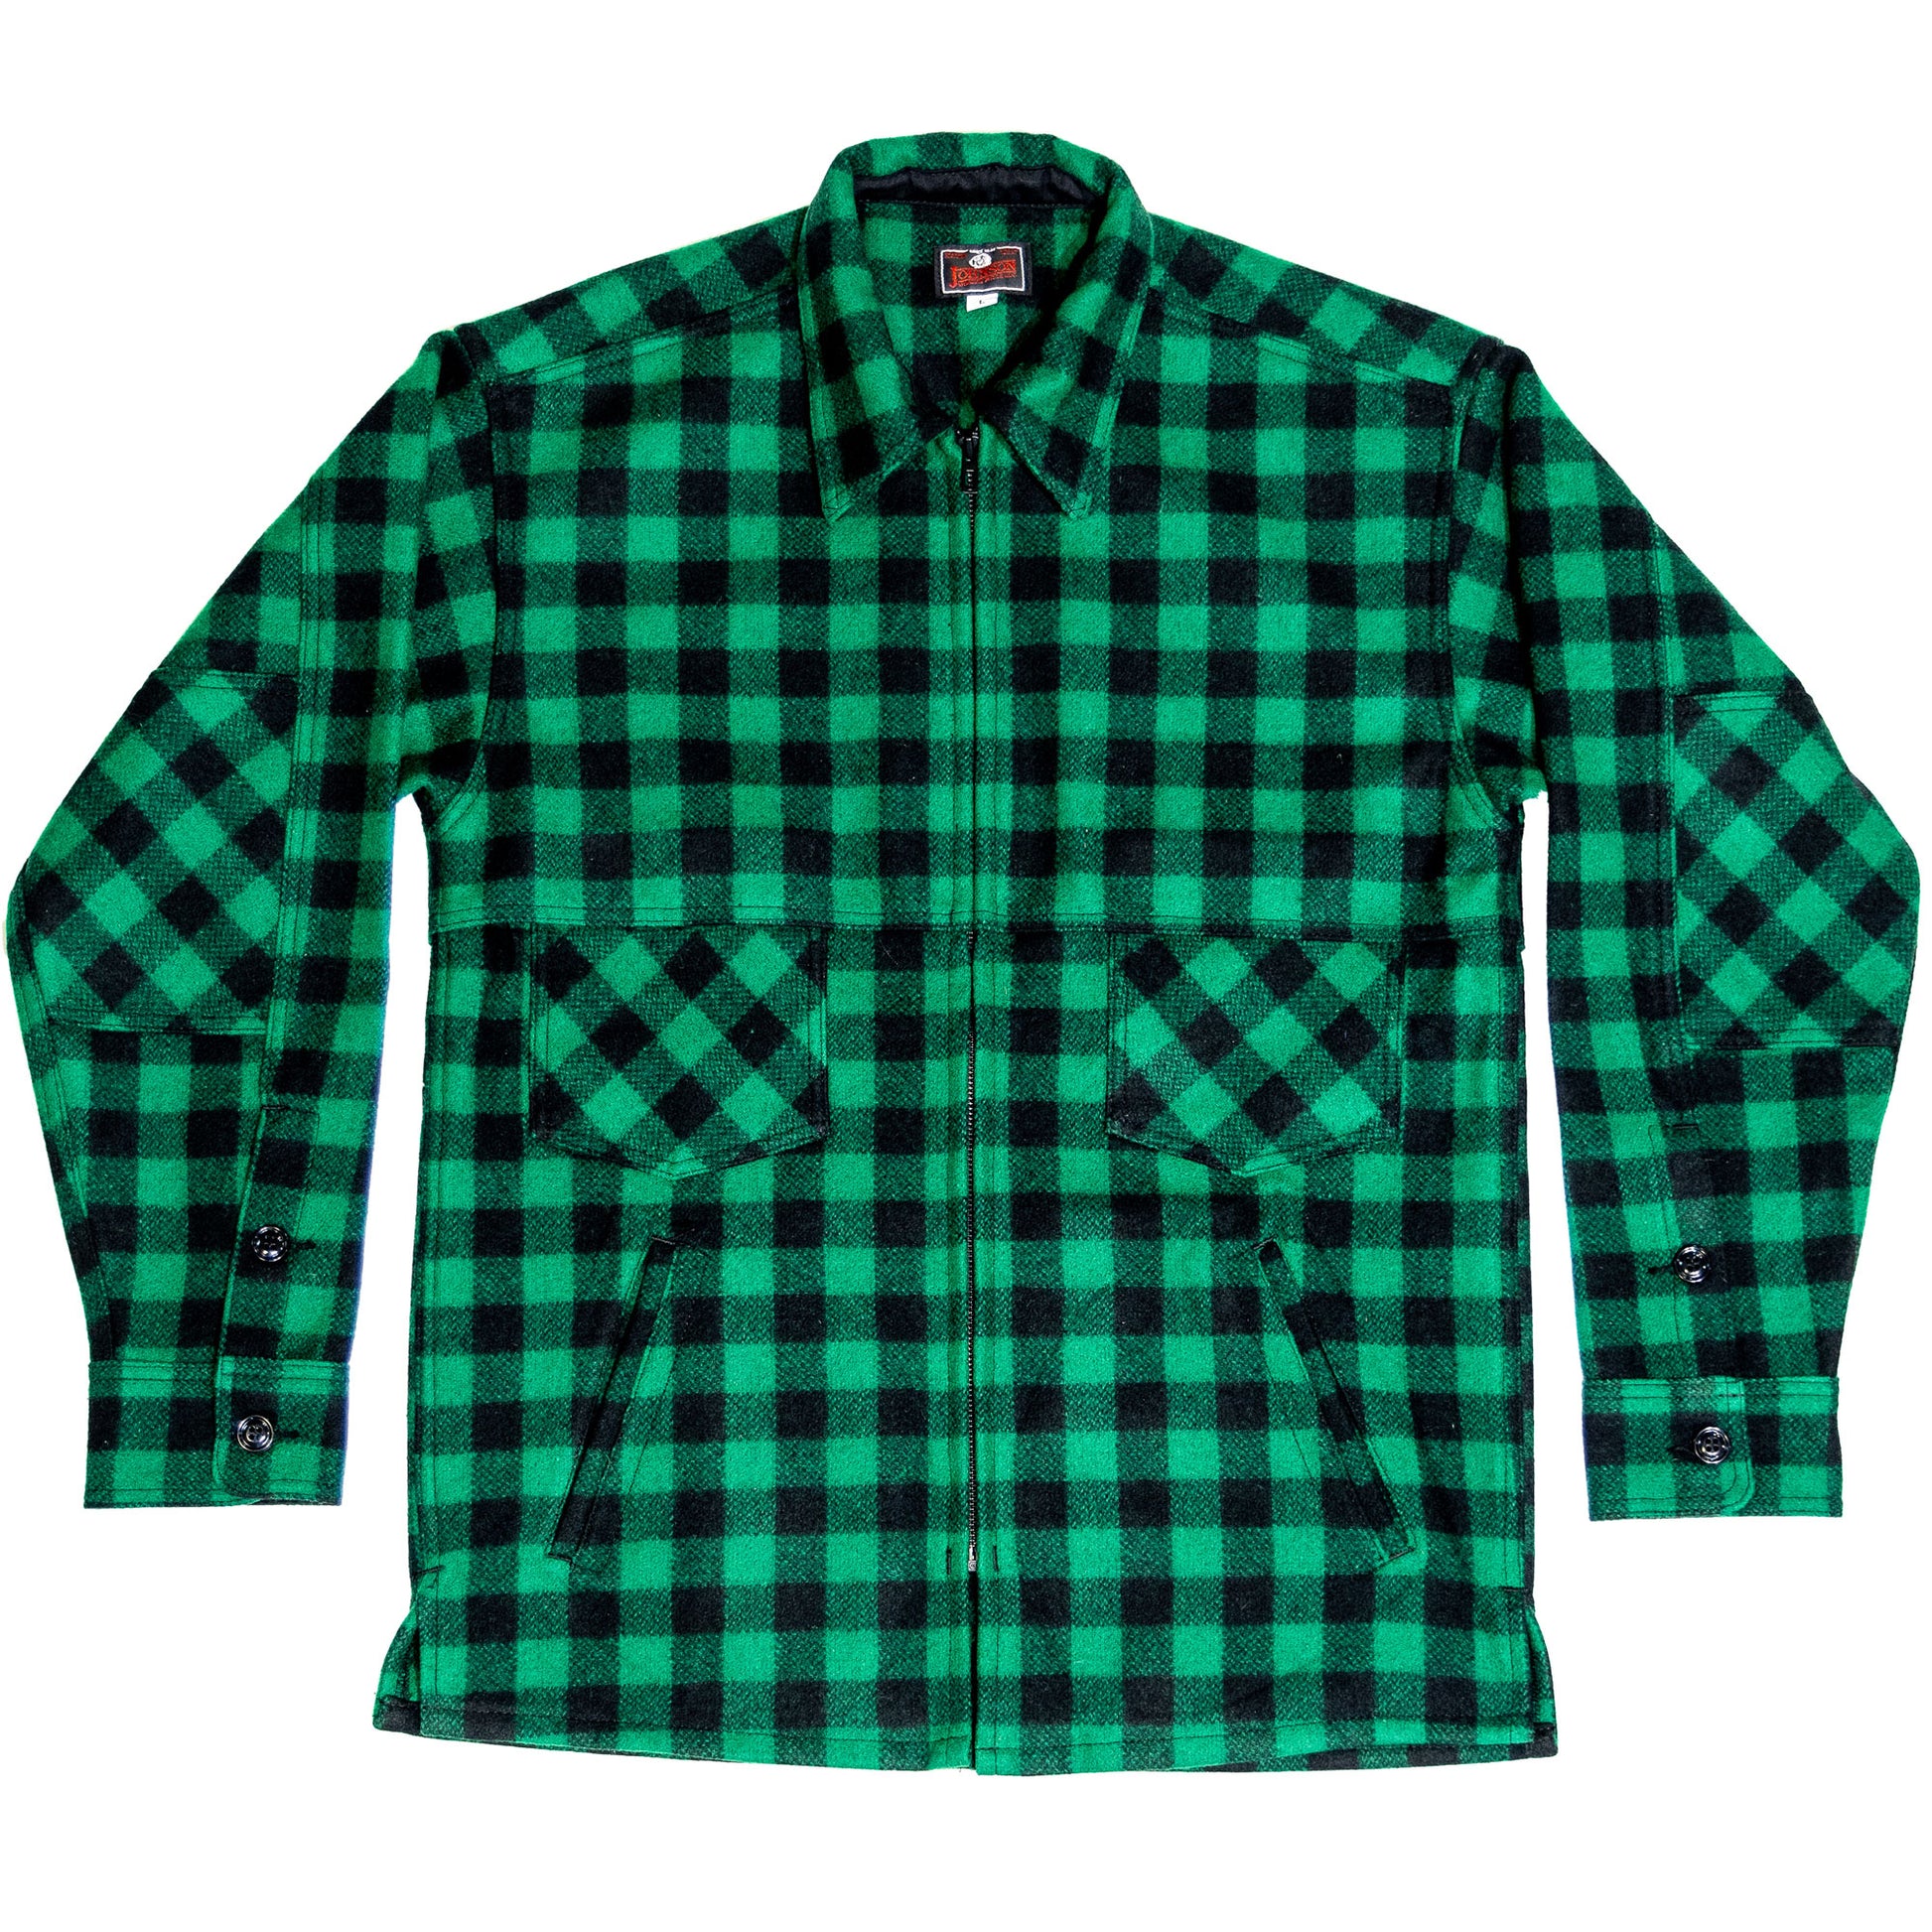 Johnson Woolen Mills northwoods x 1842 green and black buffalo check jac shirt laid flat